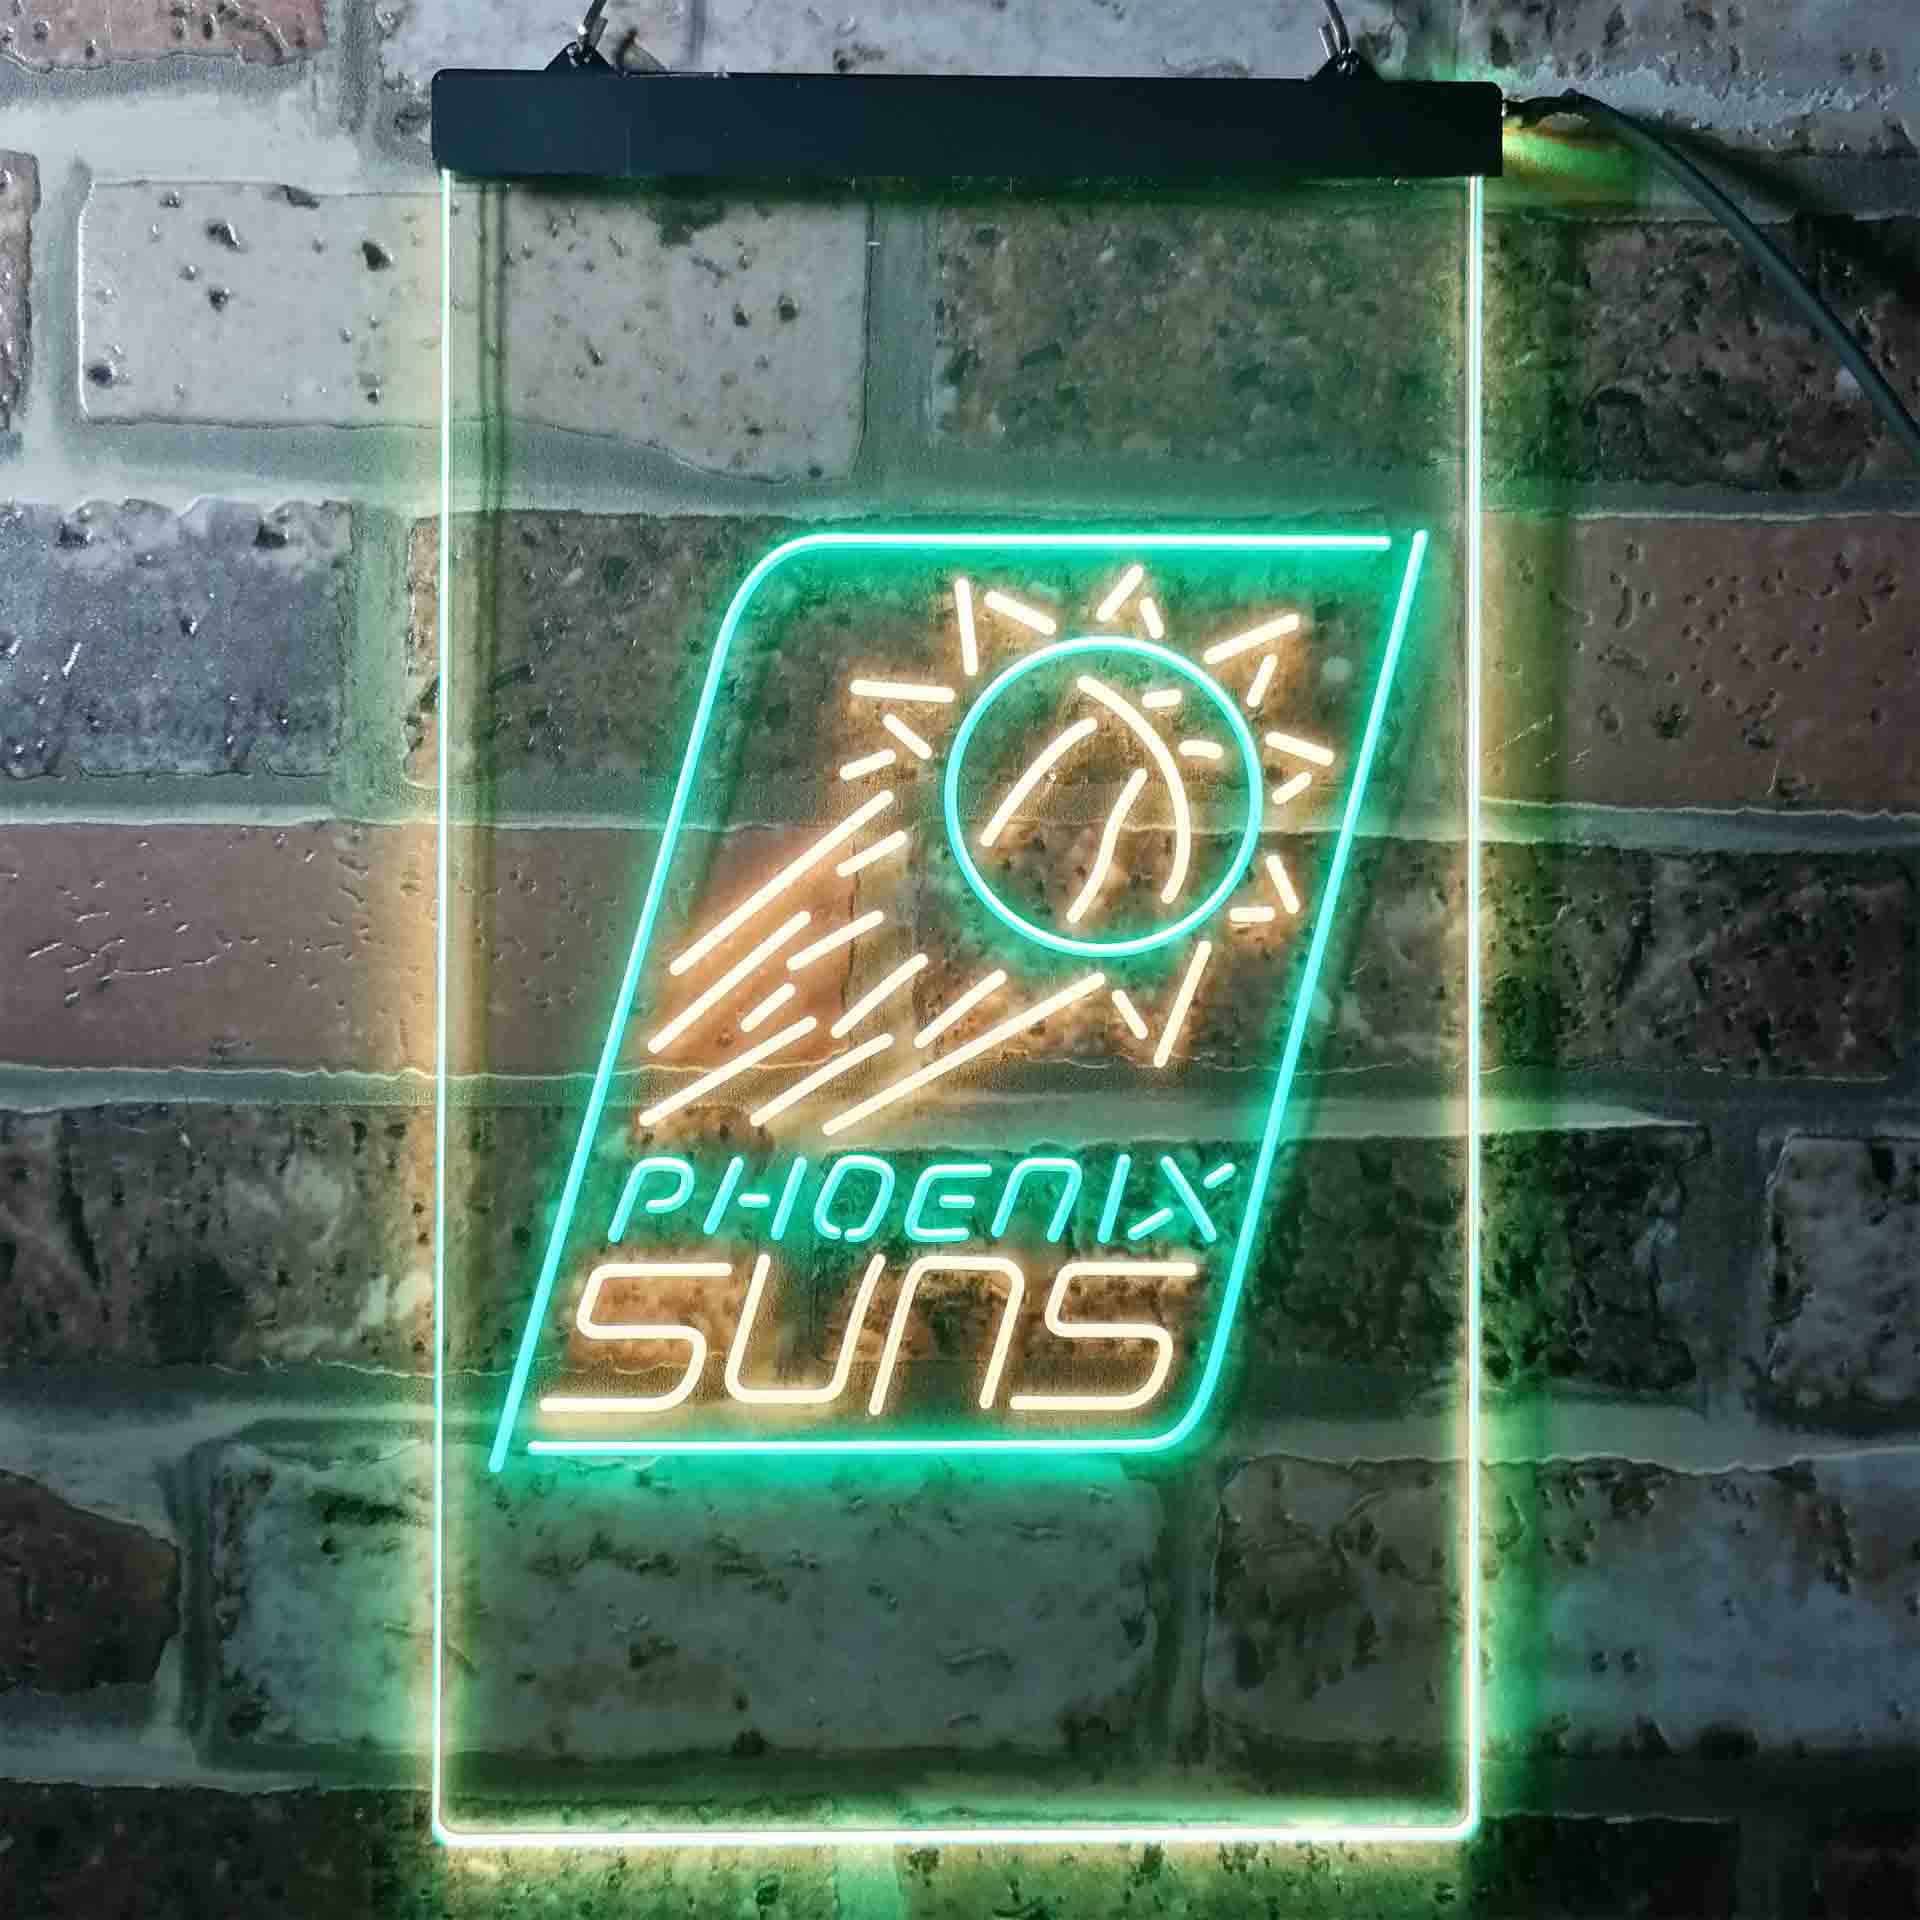 Baseball Club Phoenixs Sport Team League Sunss LED Neon Sign